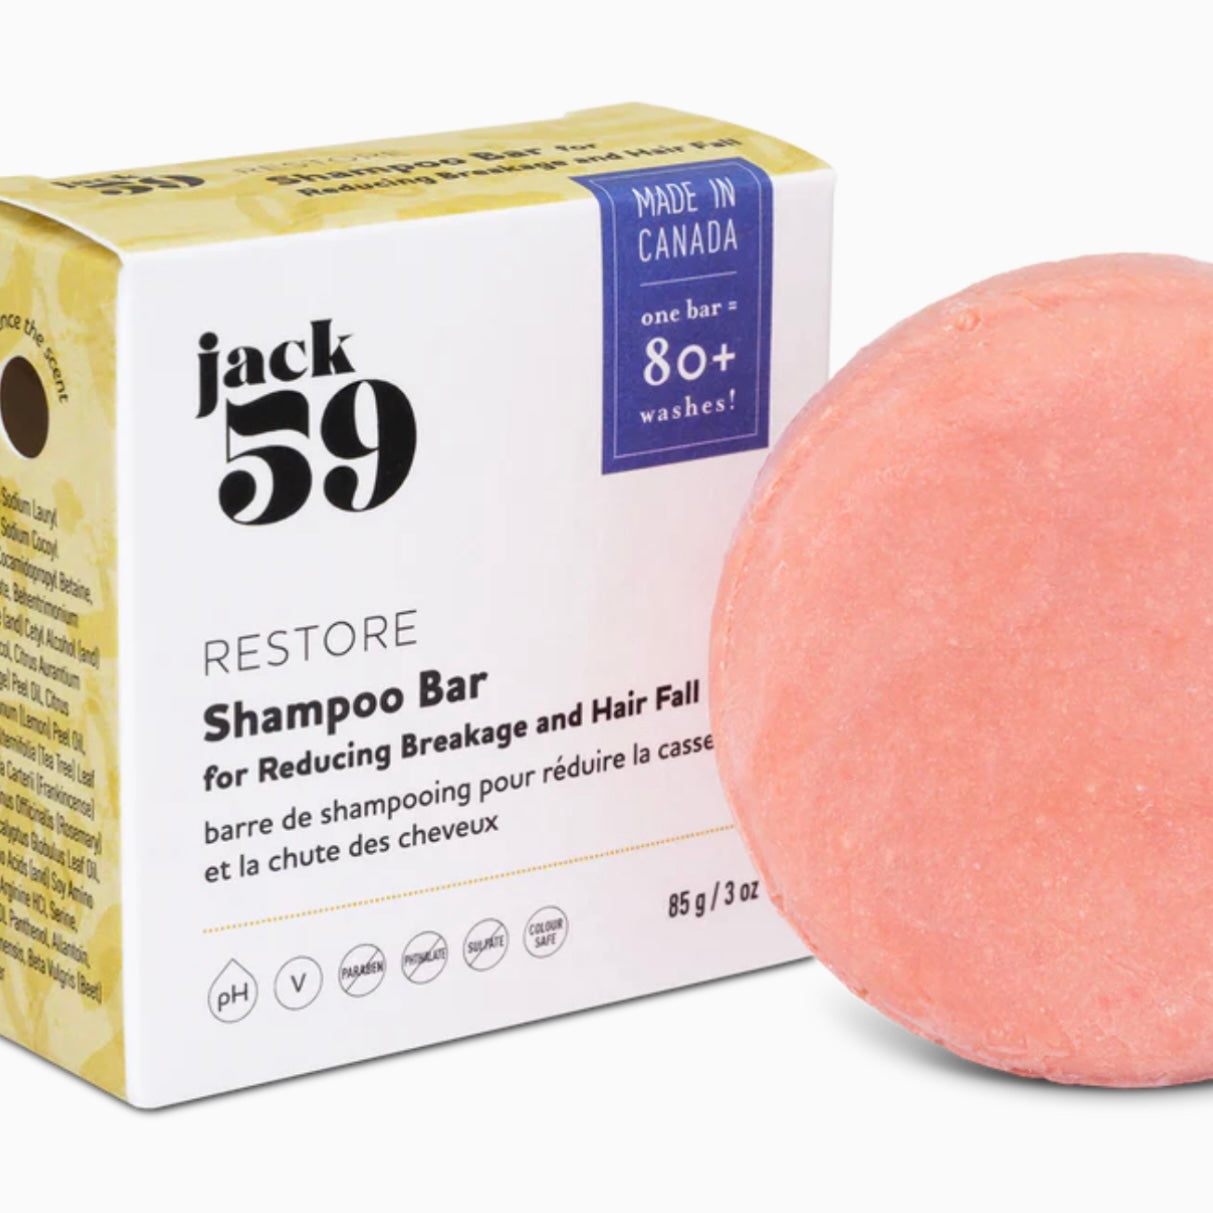 Jack 59 Shampoo Bar